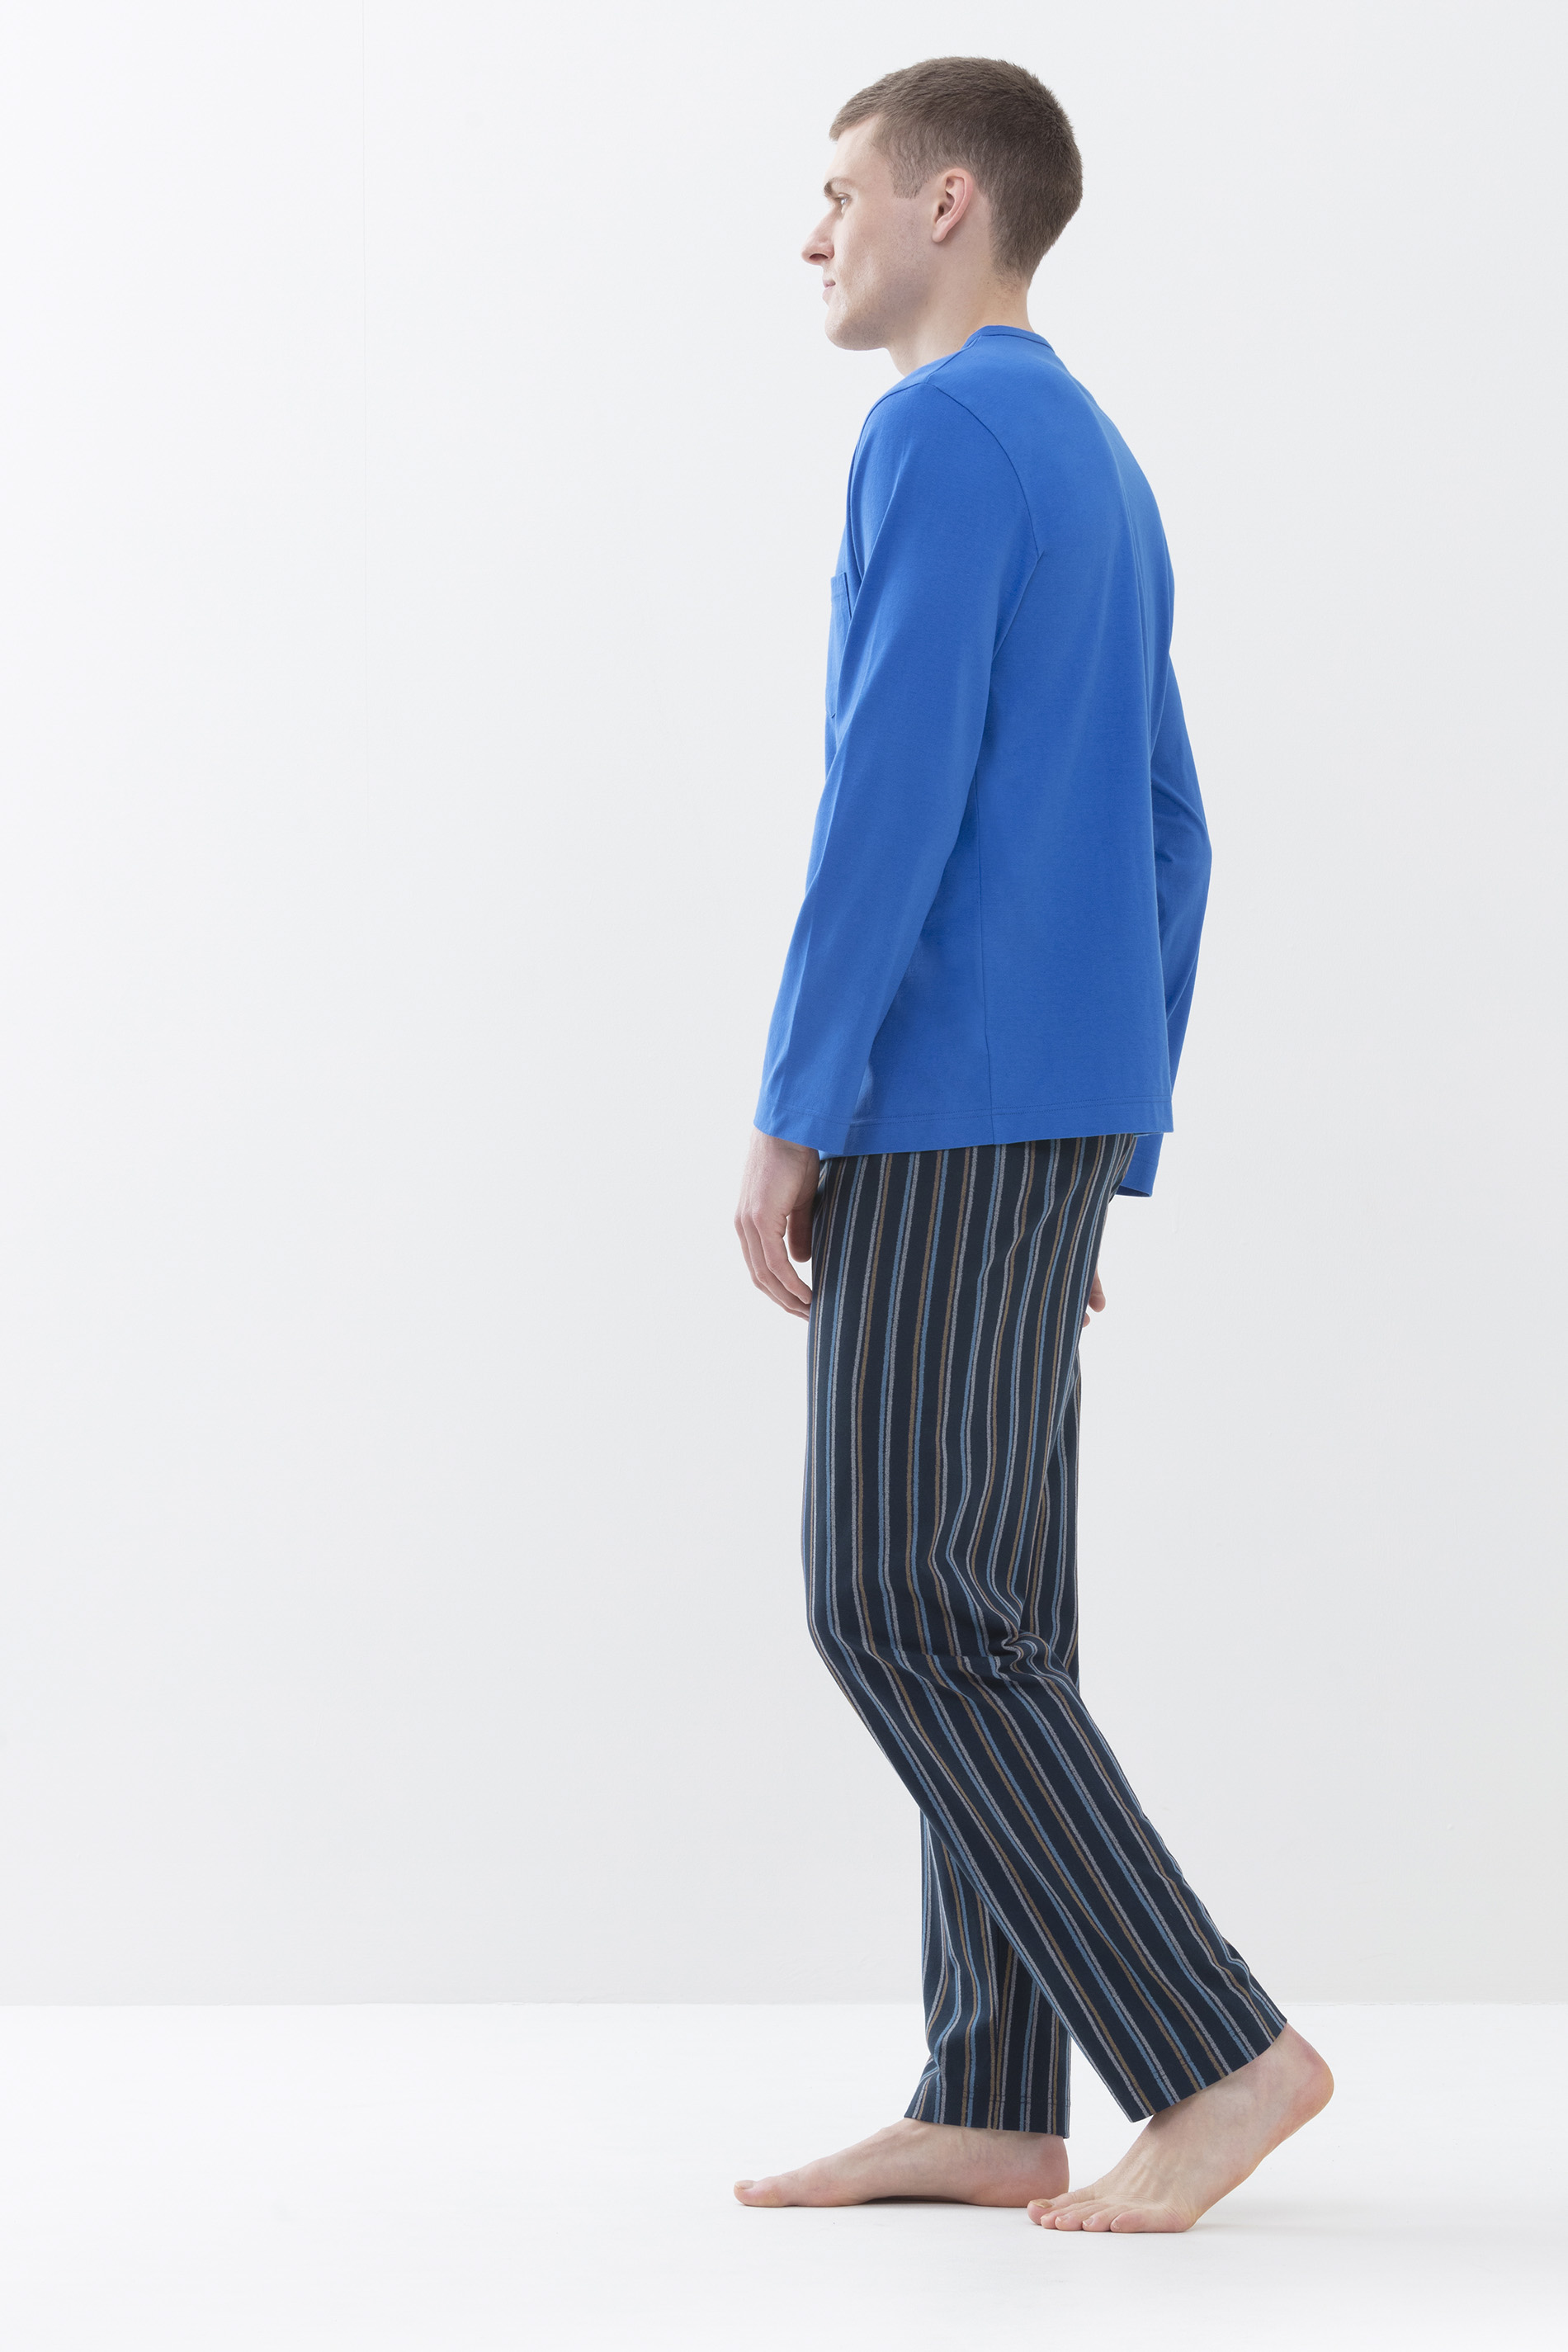 Pyjamas Porcelain Blue Serie Unregular Stripes Detail View 02 | mey®